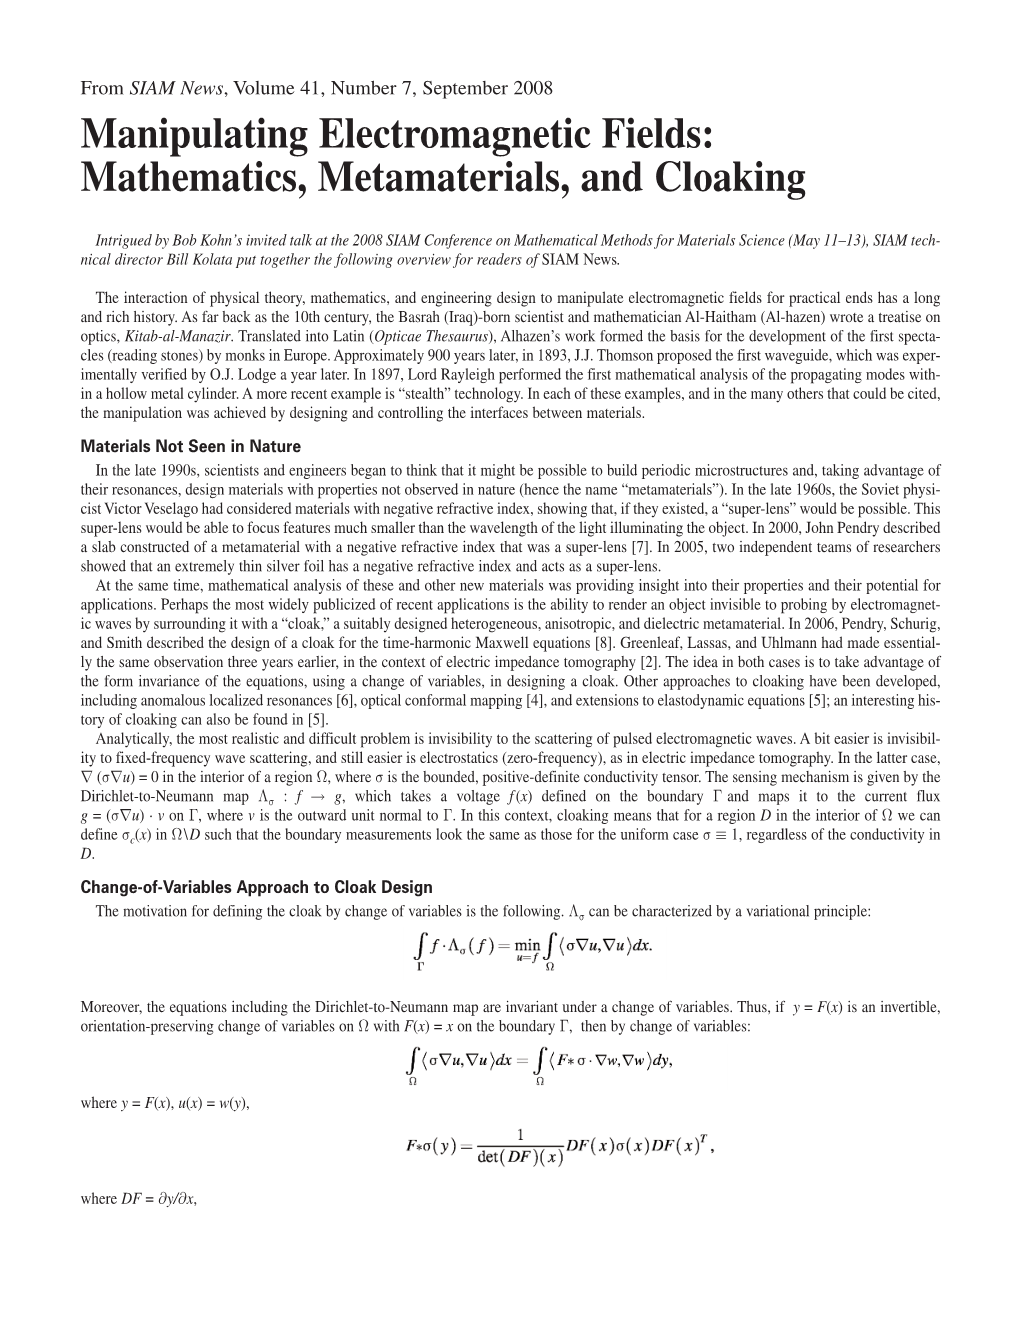 Manipulating Electromagnetic Fields: Mathematics, Metamaterials, and Cloaking